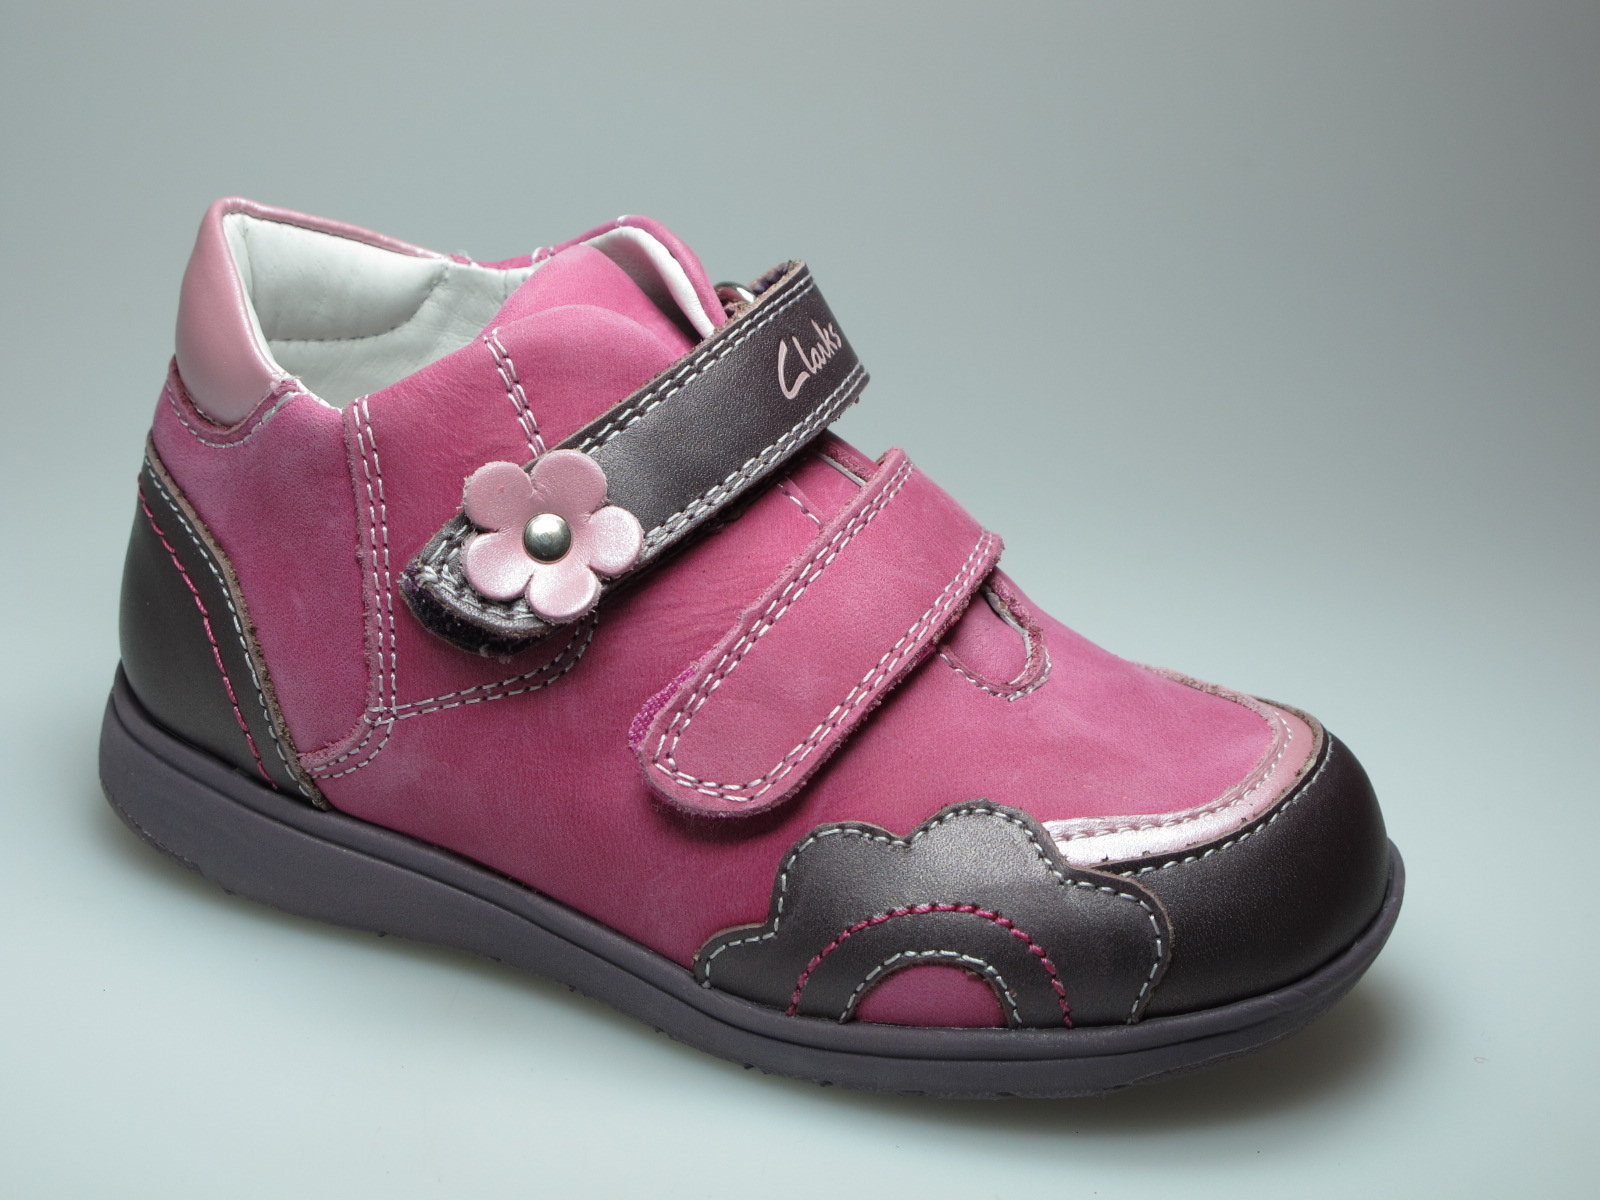 clarks shoe sale toddler